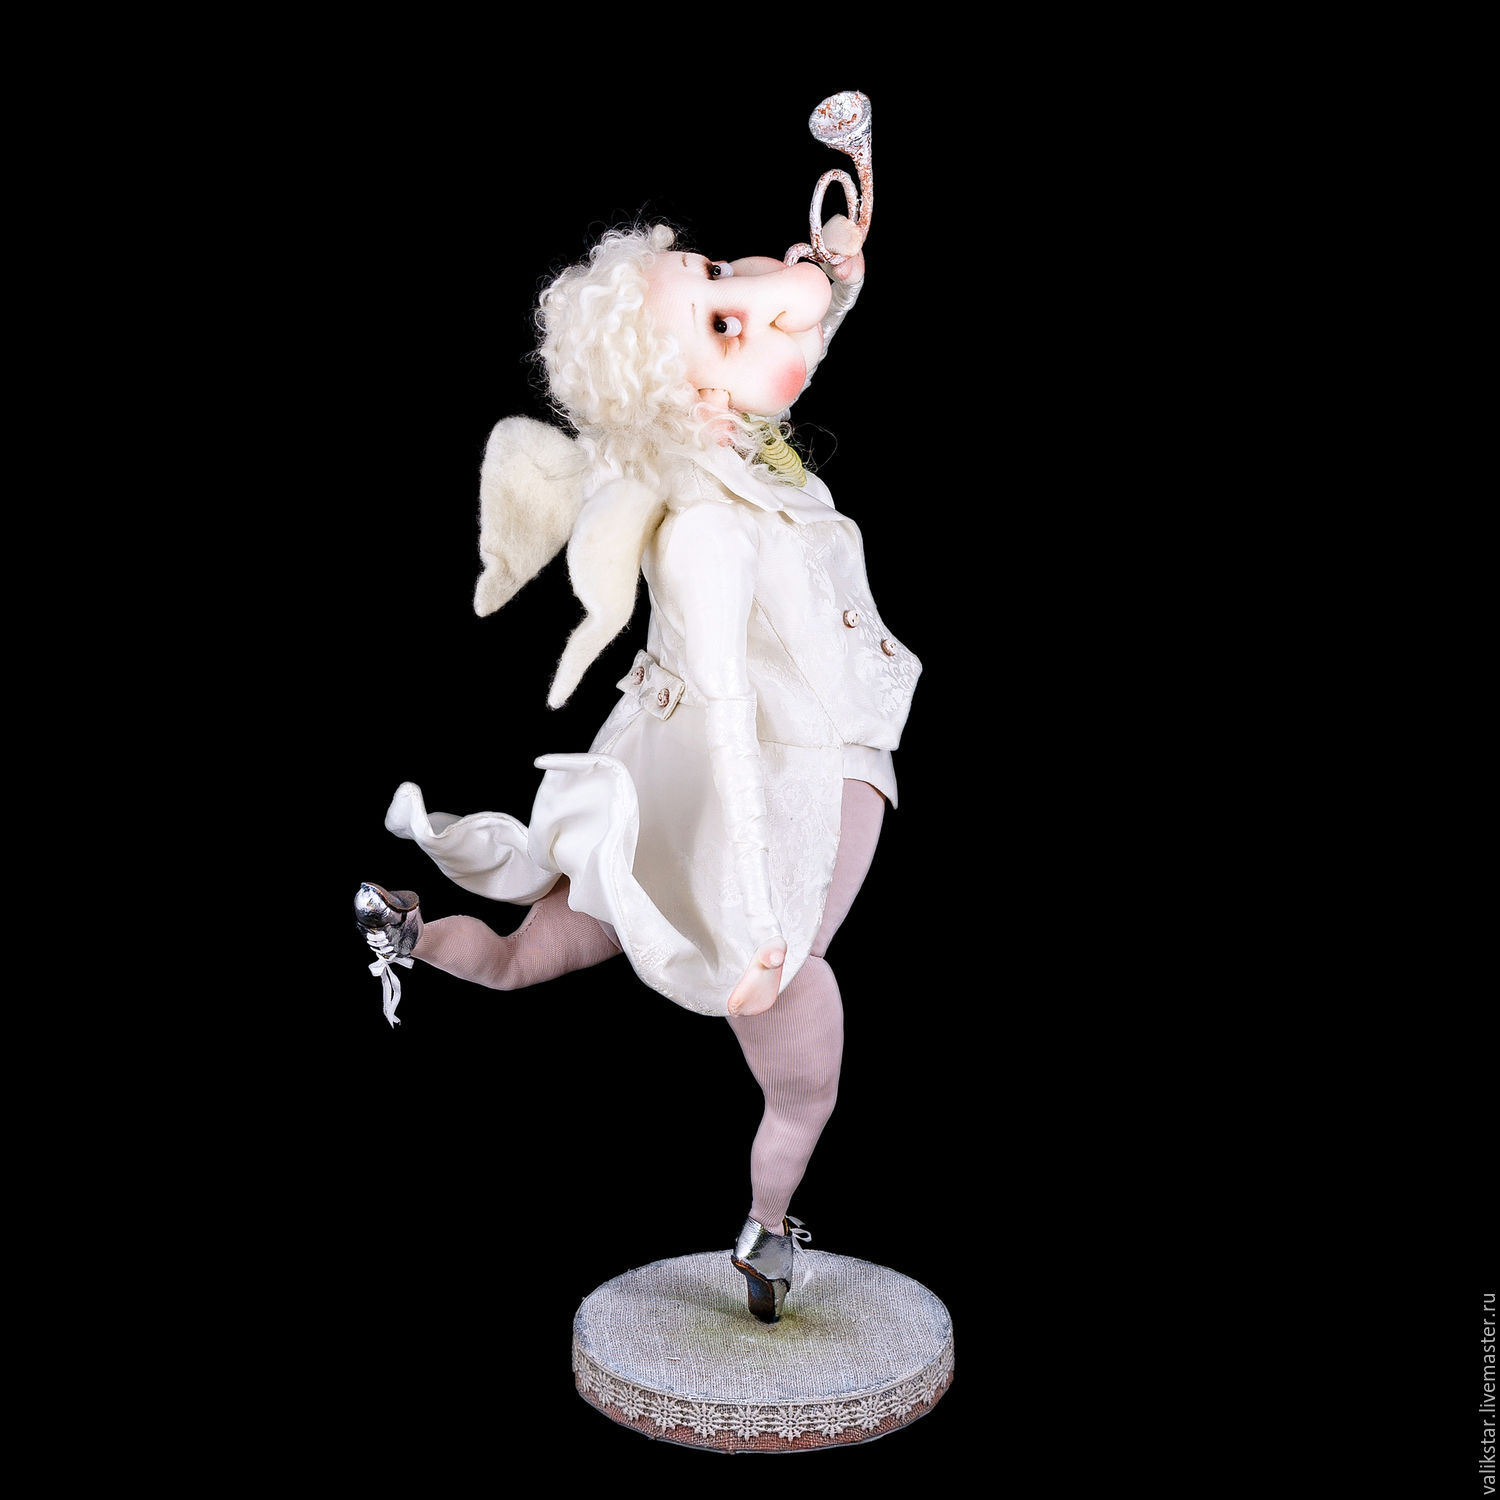 Глупый ангел пляшет. Танцующий ангел статуэтка. Статуэтка танцующим ангелочком. Танцующие фигурки на ножках. Танцующий ангел на одной ножке статуэтка.